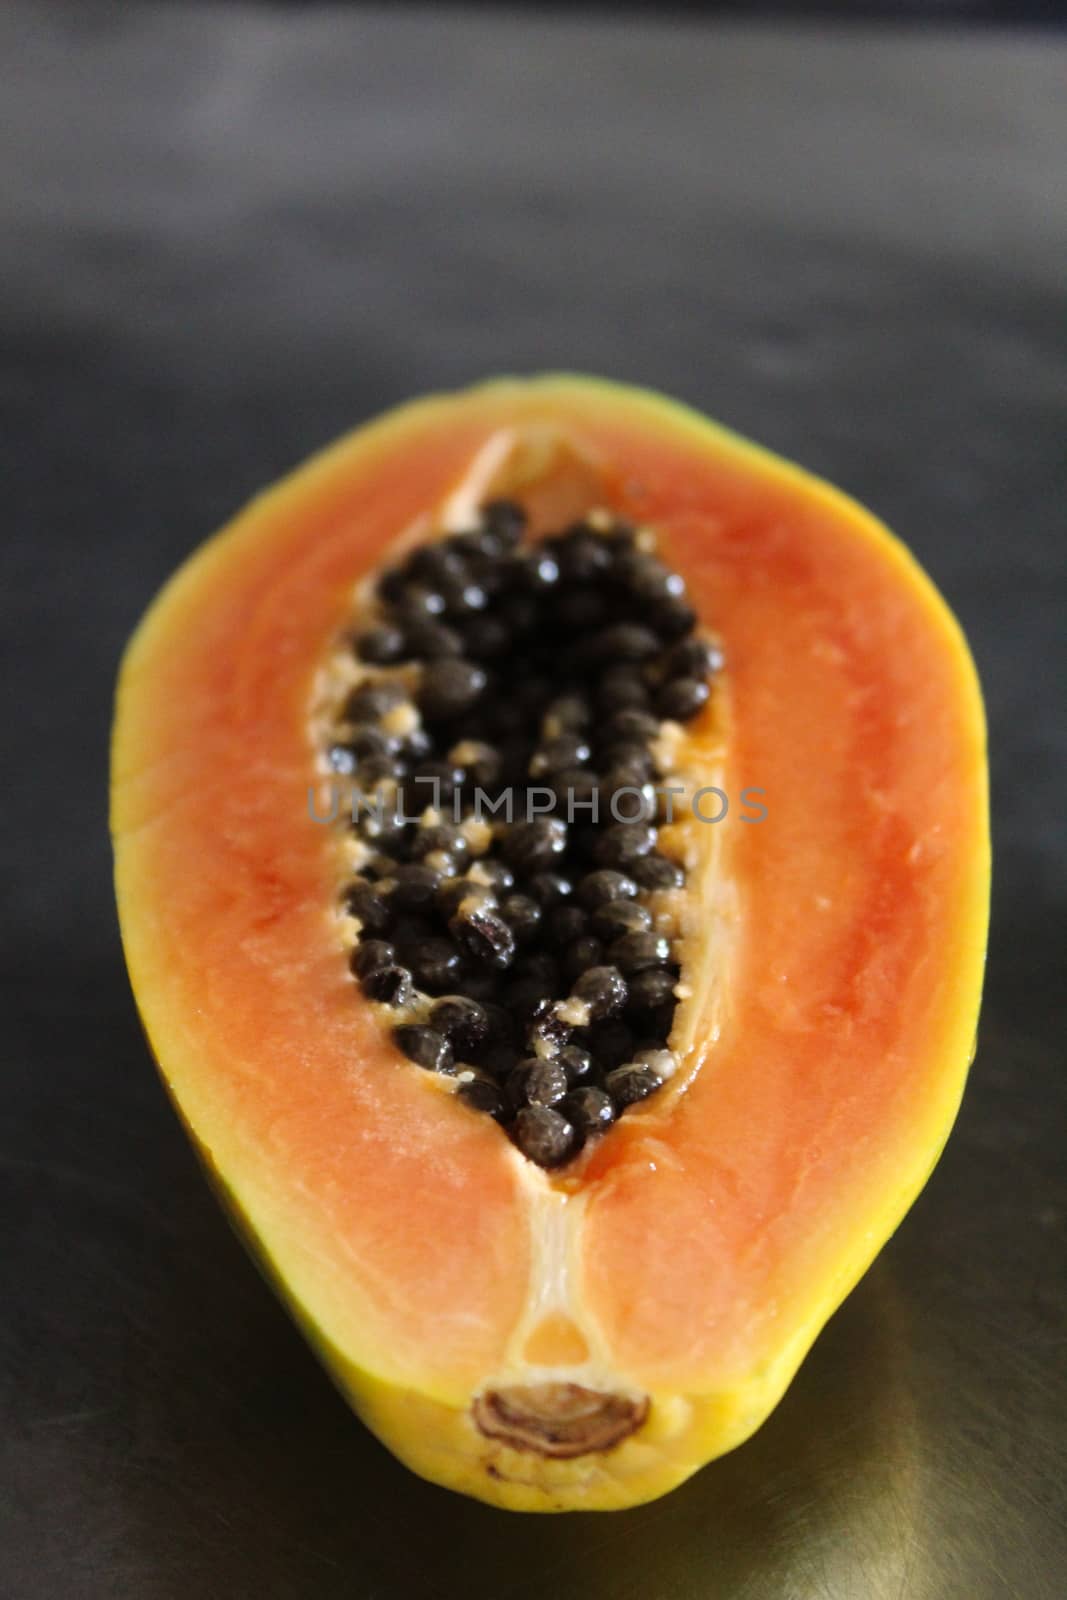 Vertical image of a cut half of a papaya fruit.